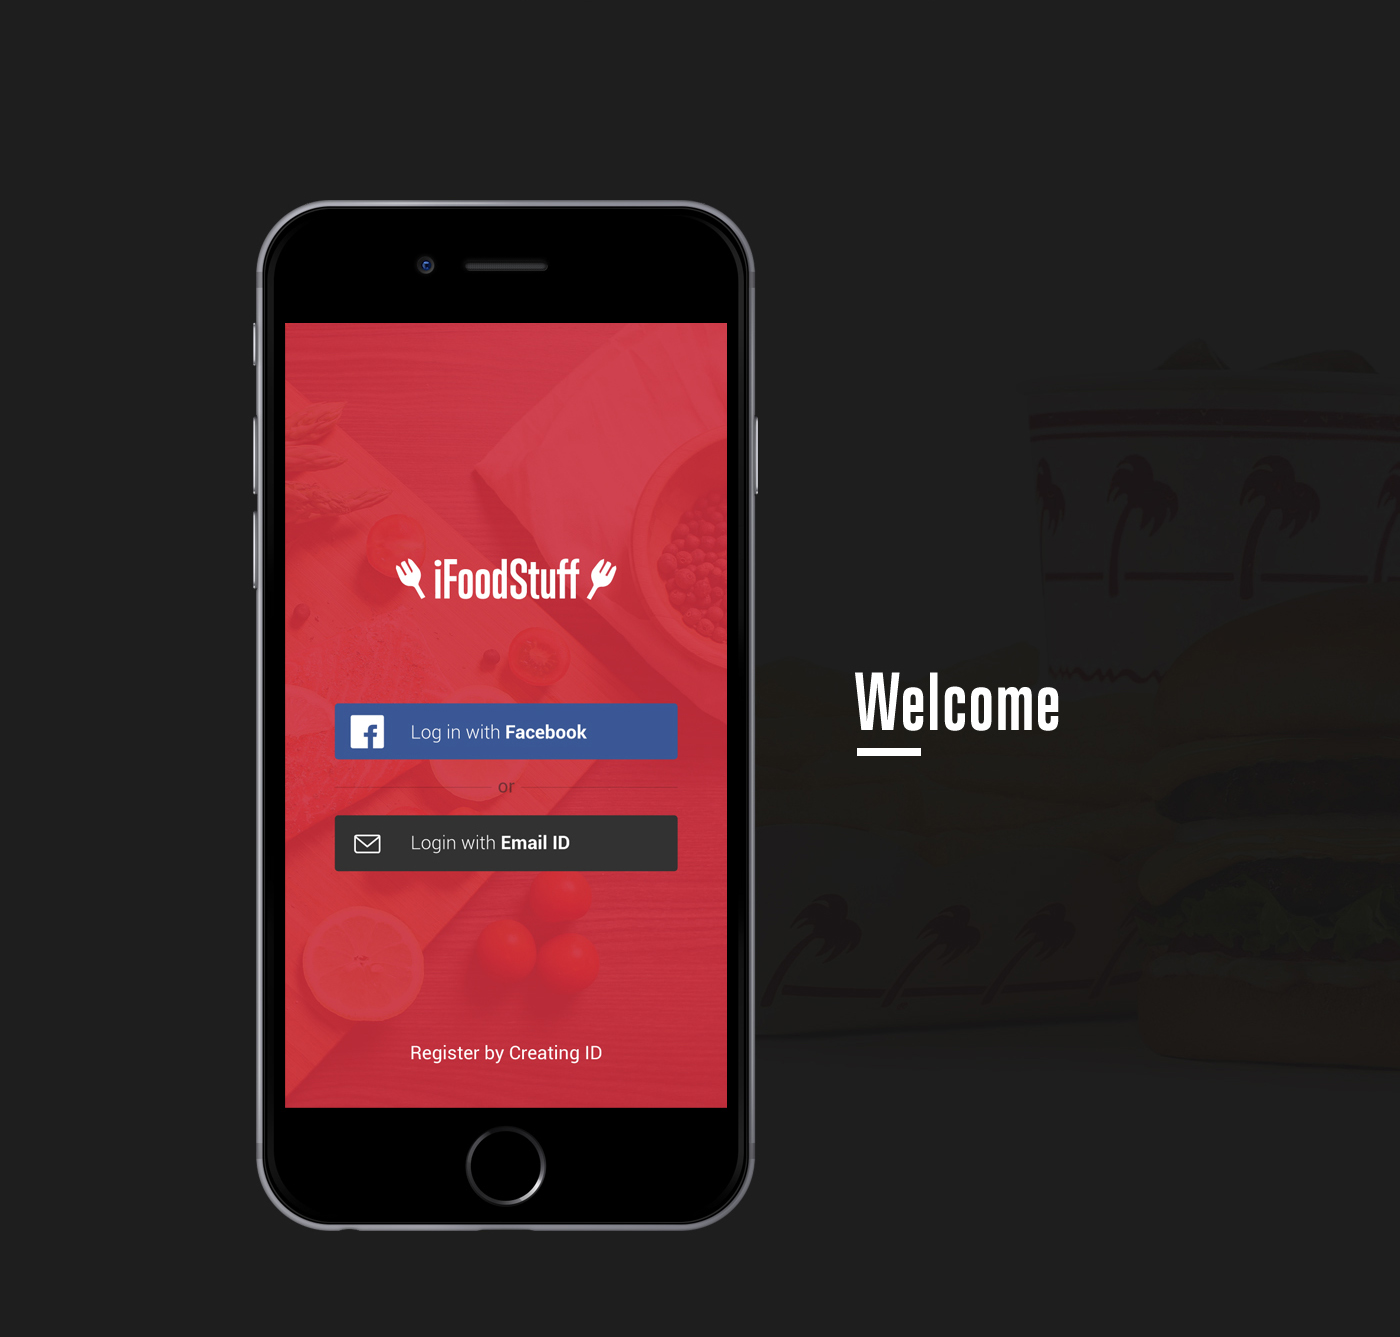 Food  app apps restaurant cook delivery dishes vouchers reservation Order